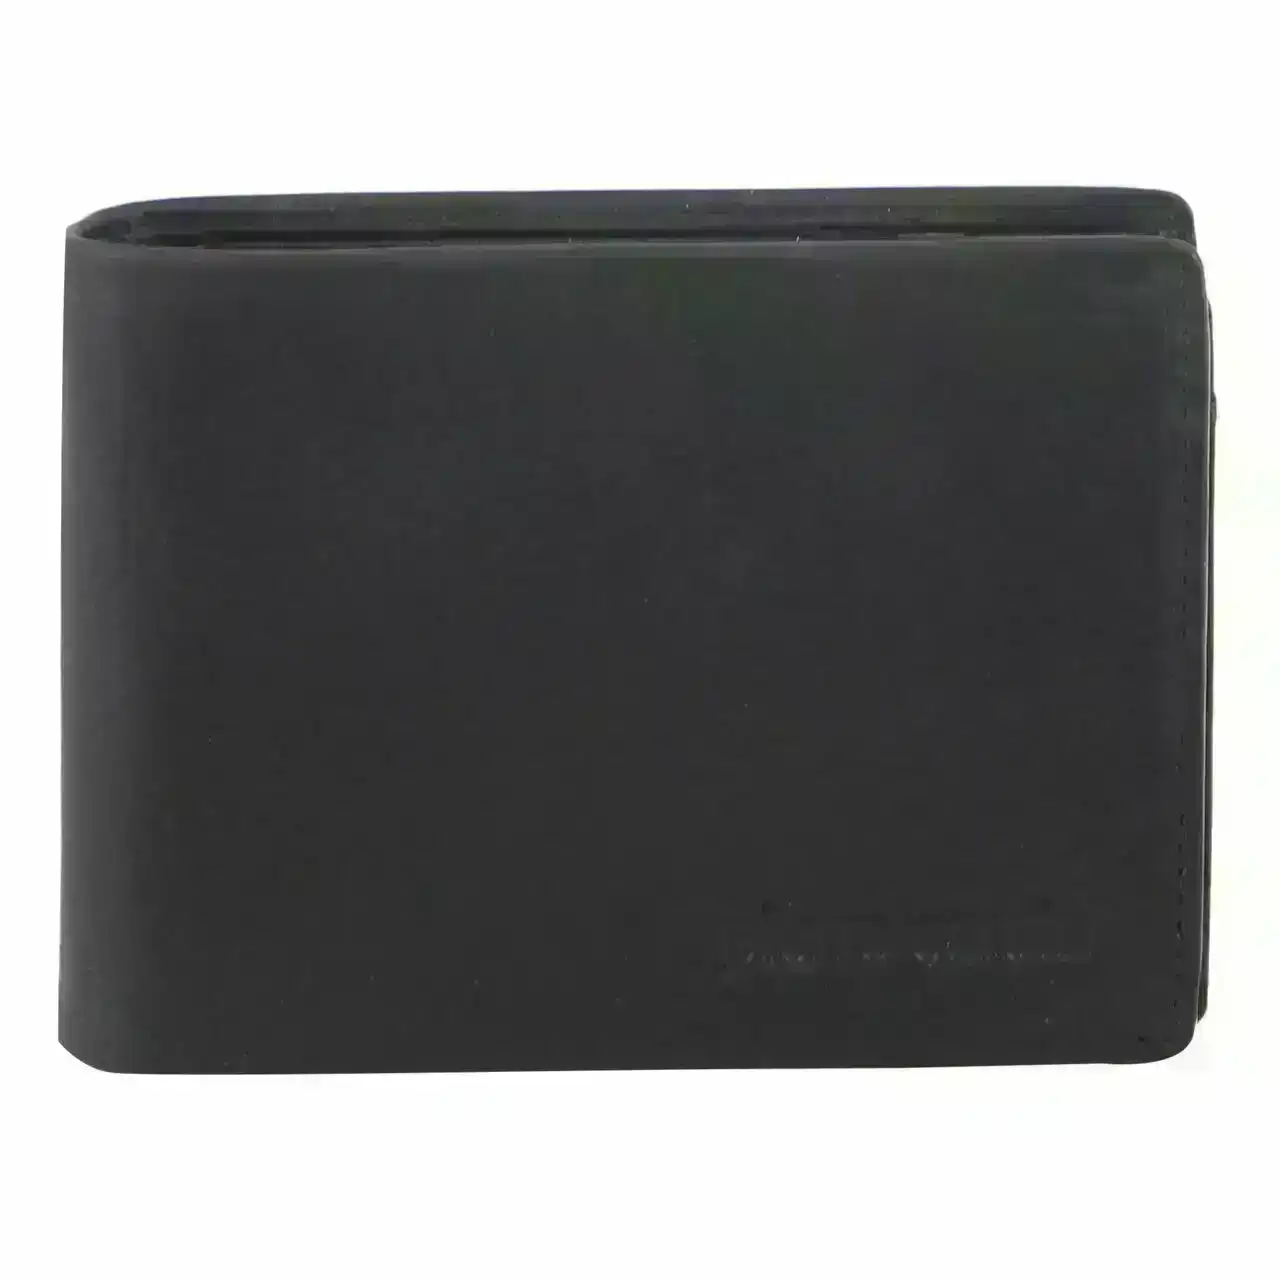 Pierre Cardin Mens Rustic Leather Bi-Fold Wallet RFID Protected - Black